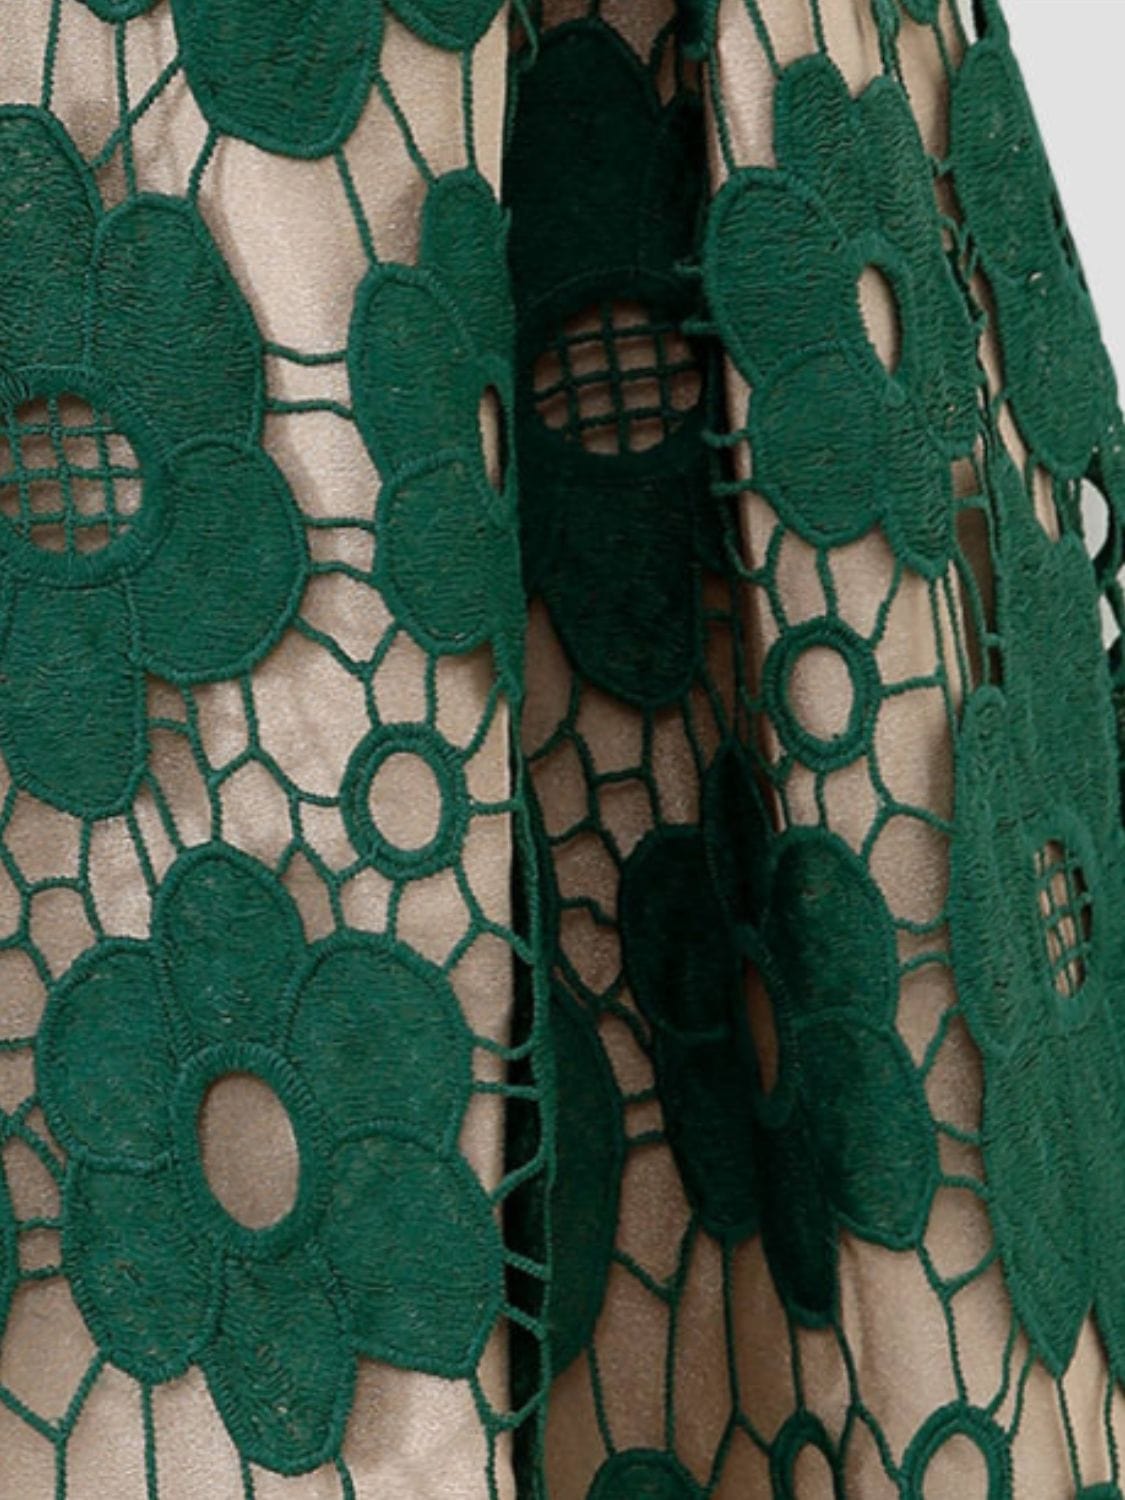 Floral Lace A-Line Skirt - Body By J'ne